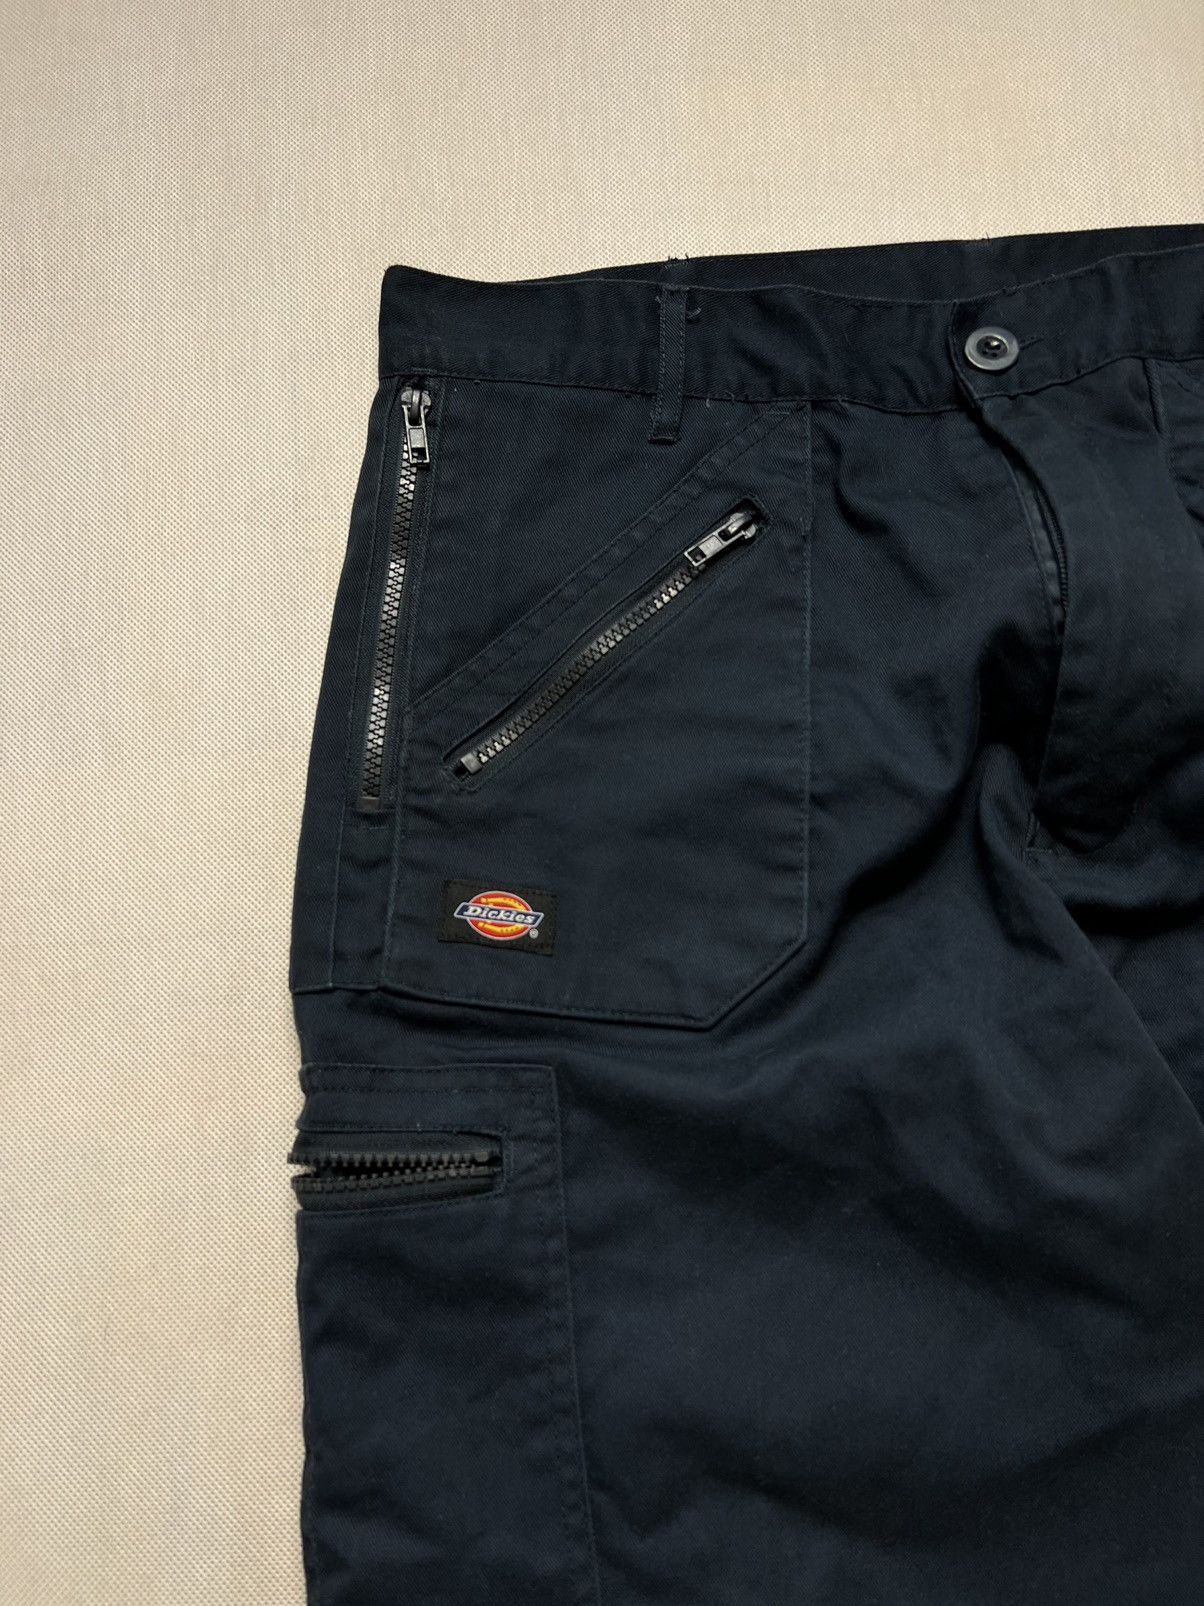 Vintage Trousers Dickies vintage navy pocket Size US 34 / EU 50 - 3 Thumbnail